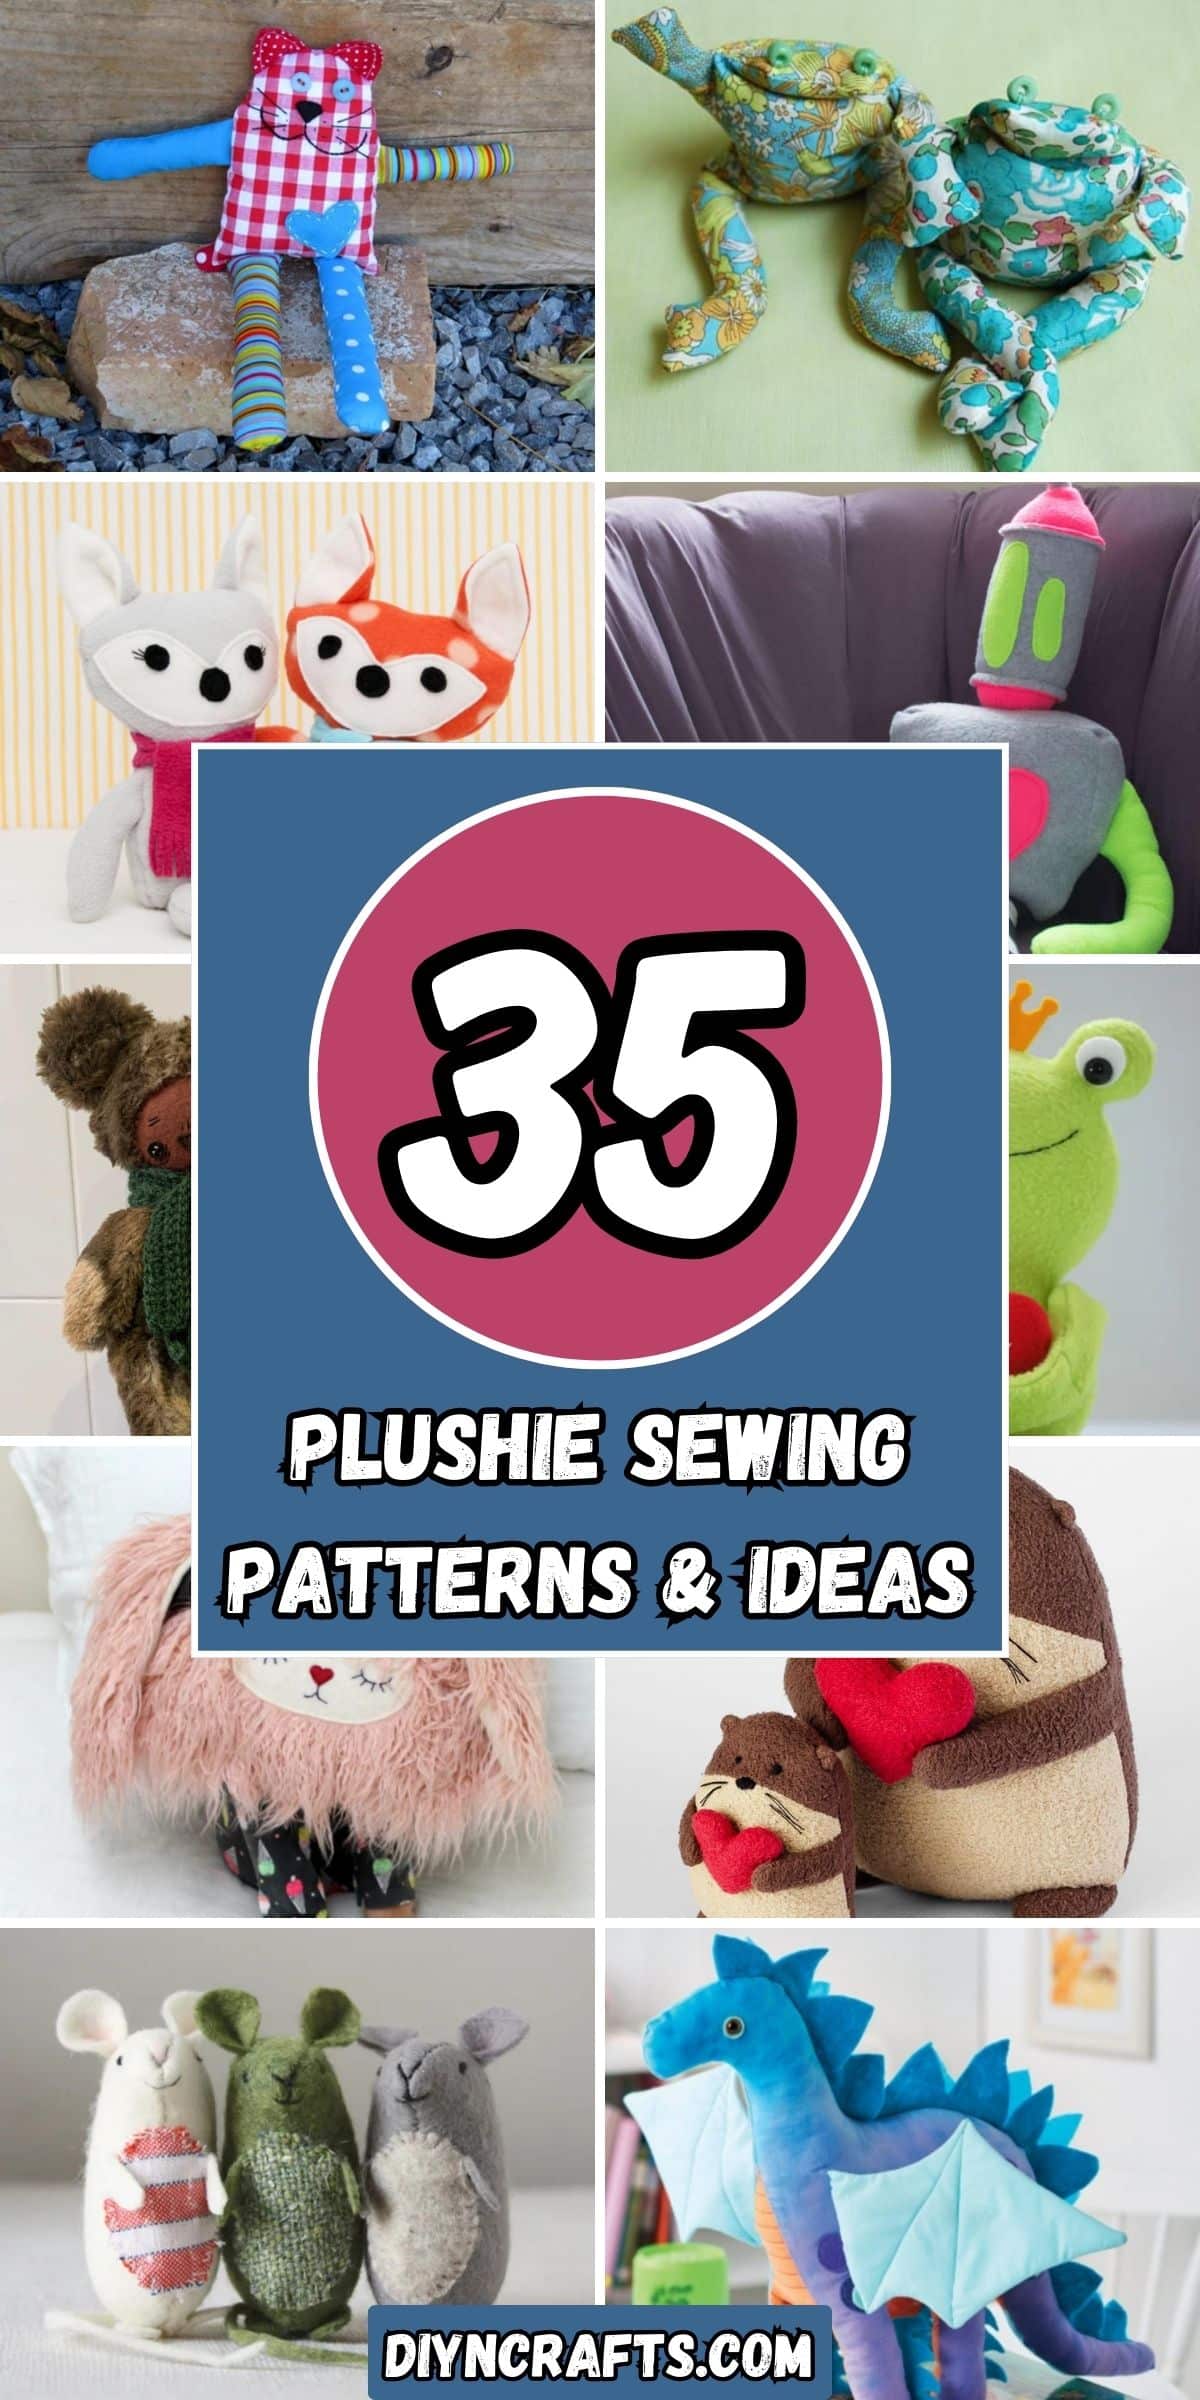 35 Plushie Sewing Patterns & Ideas collage.